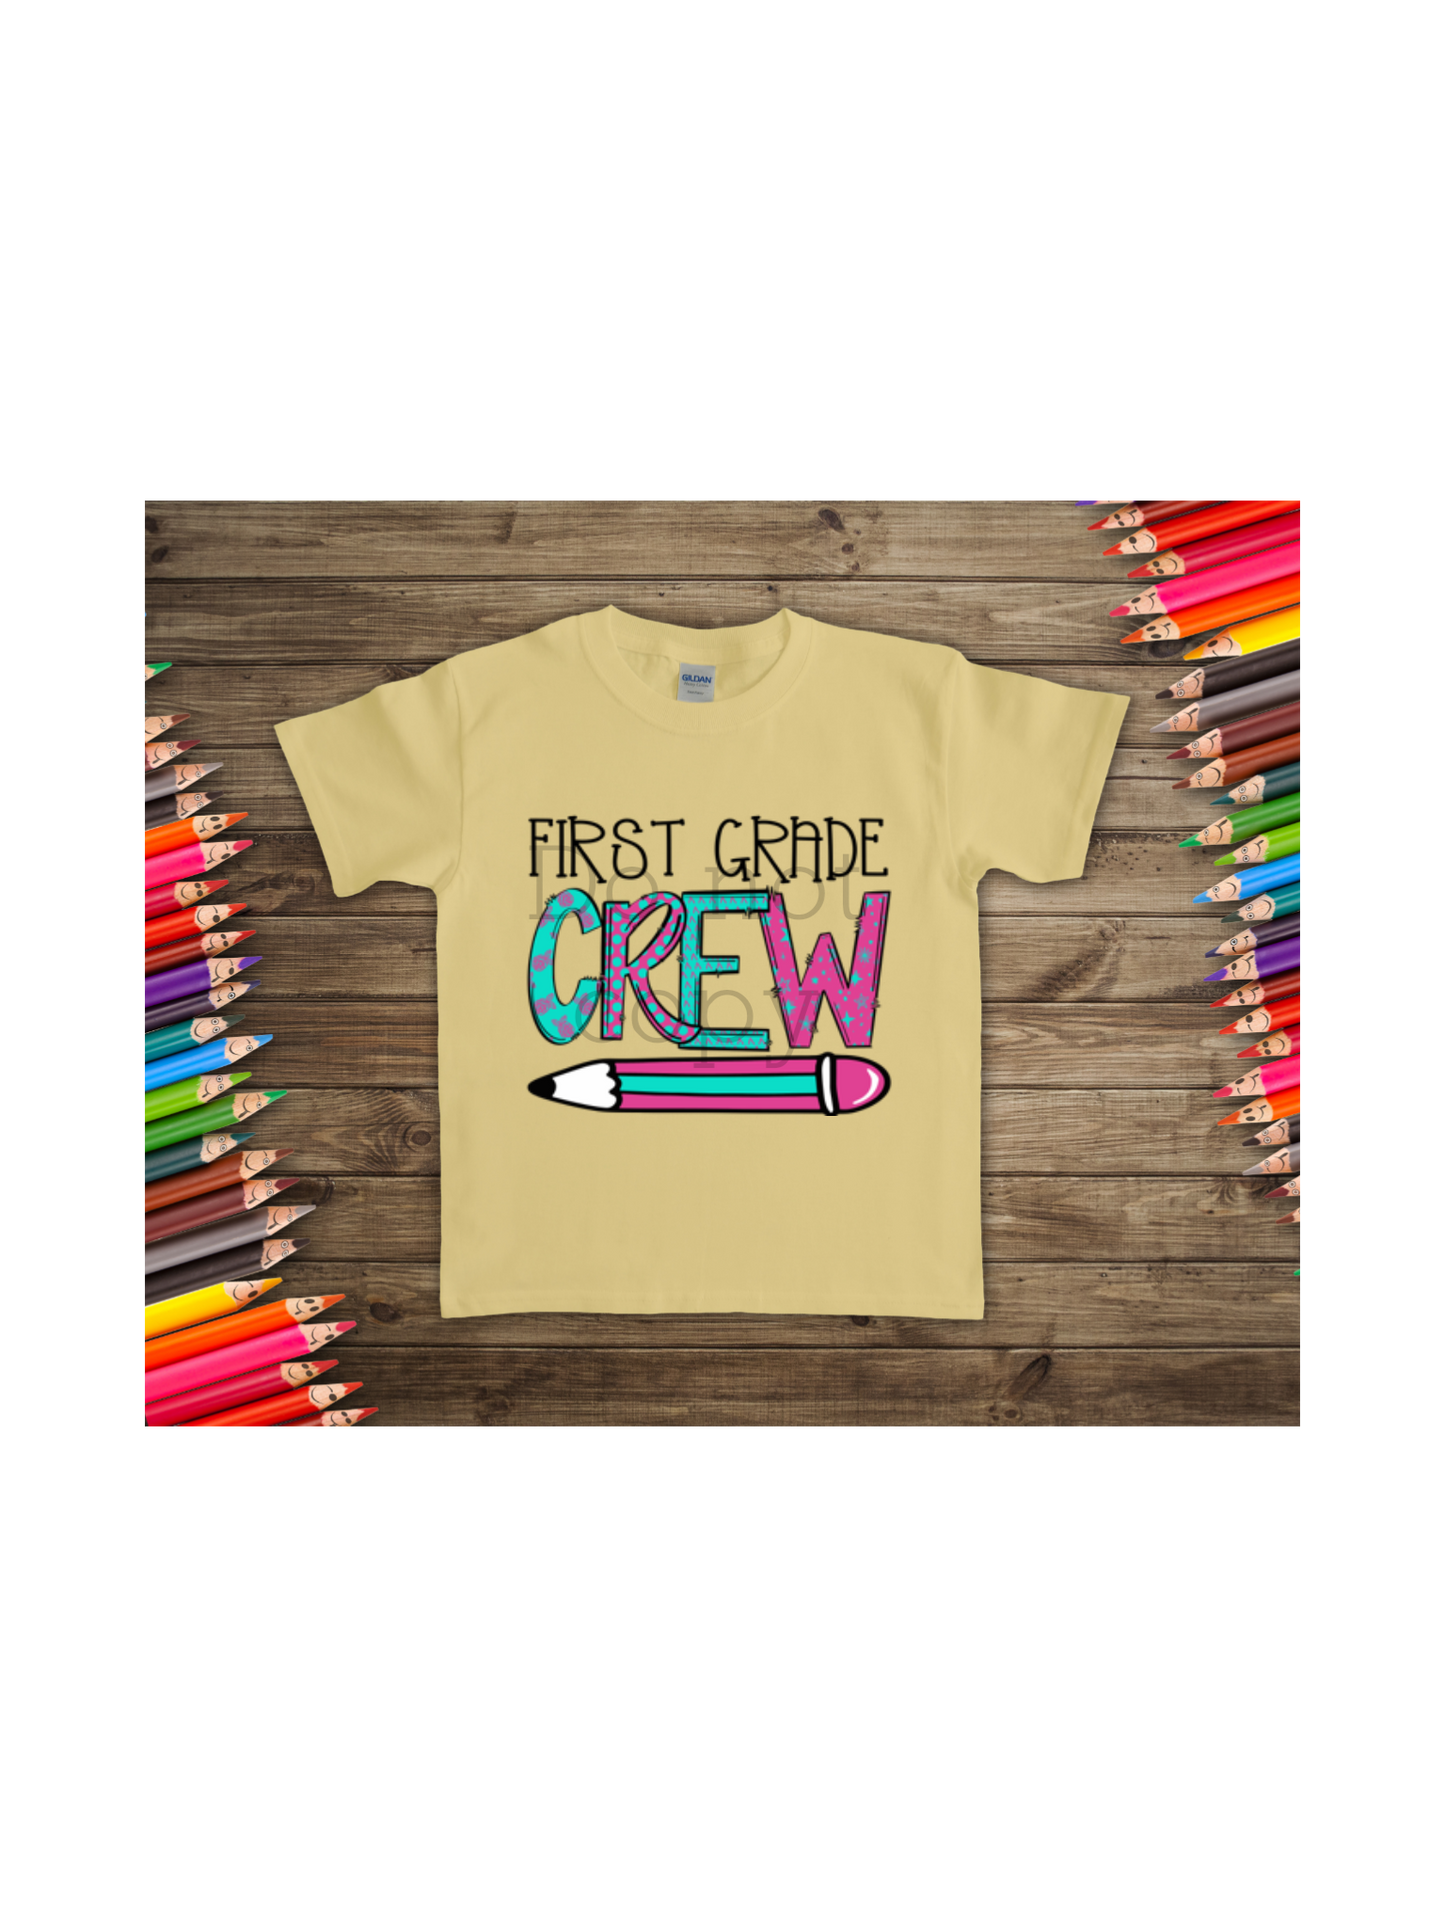 First grade crew-DTF